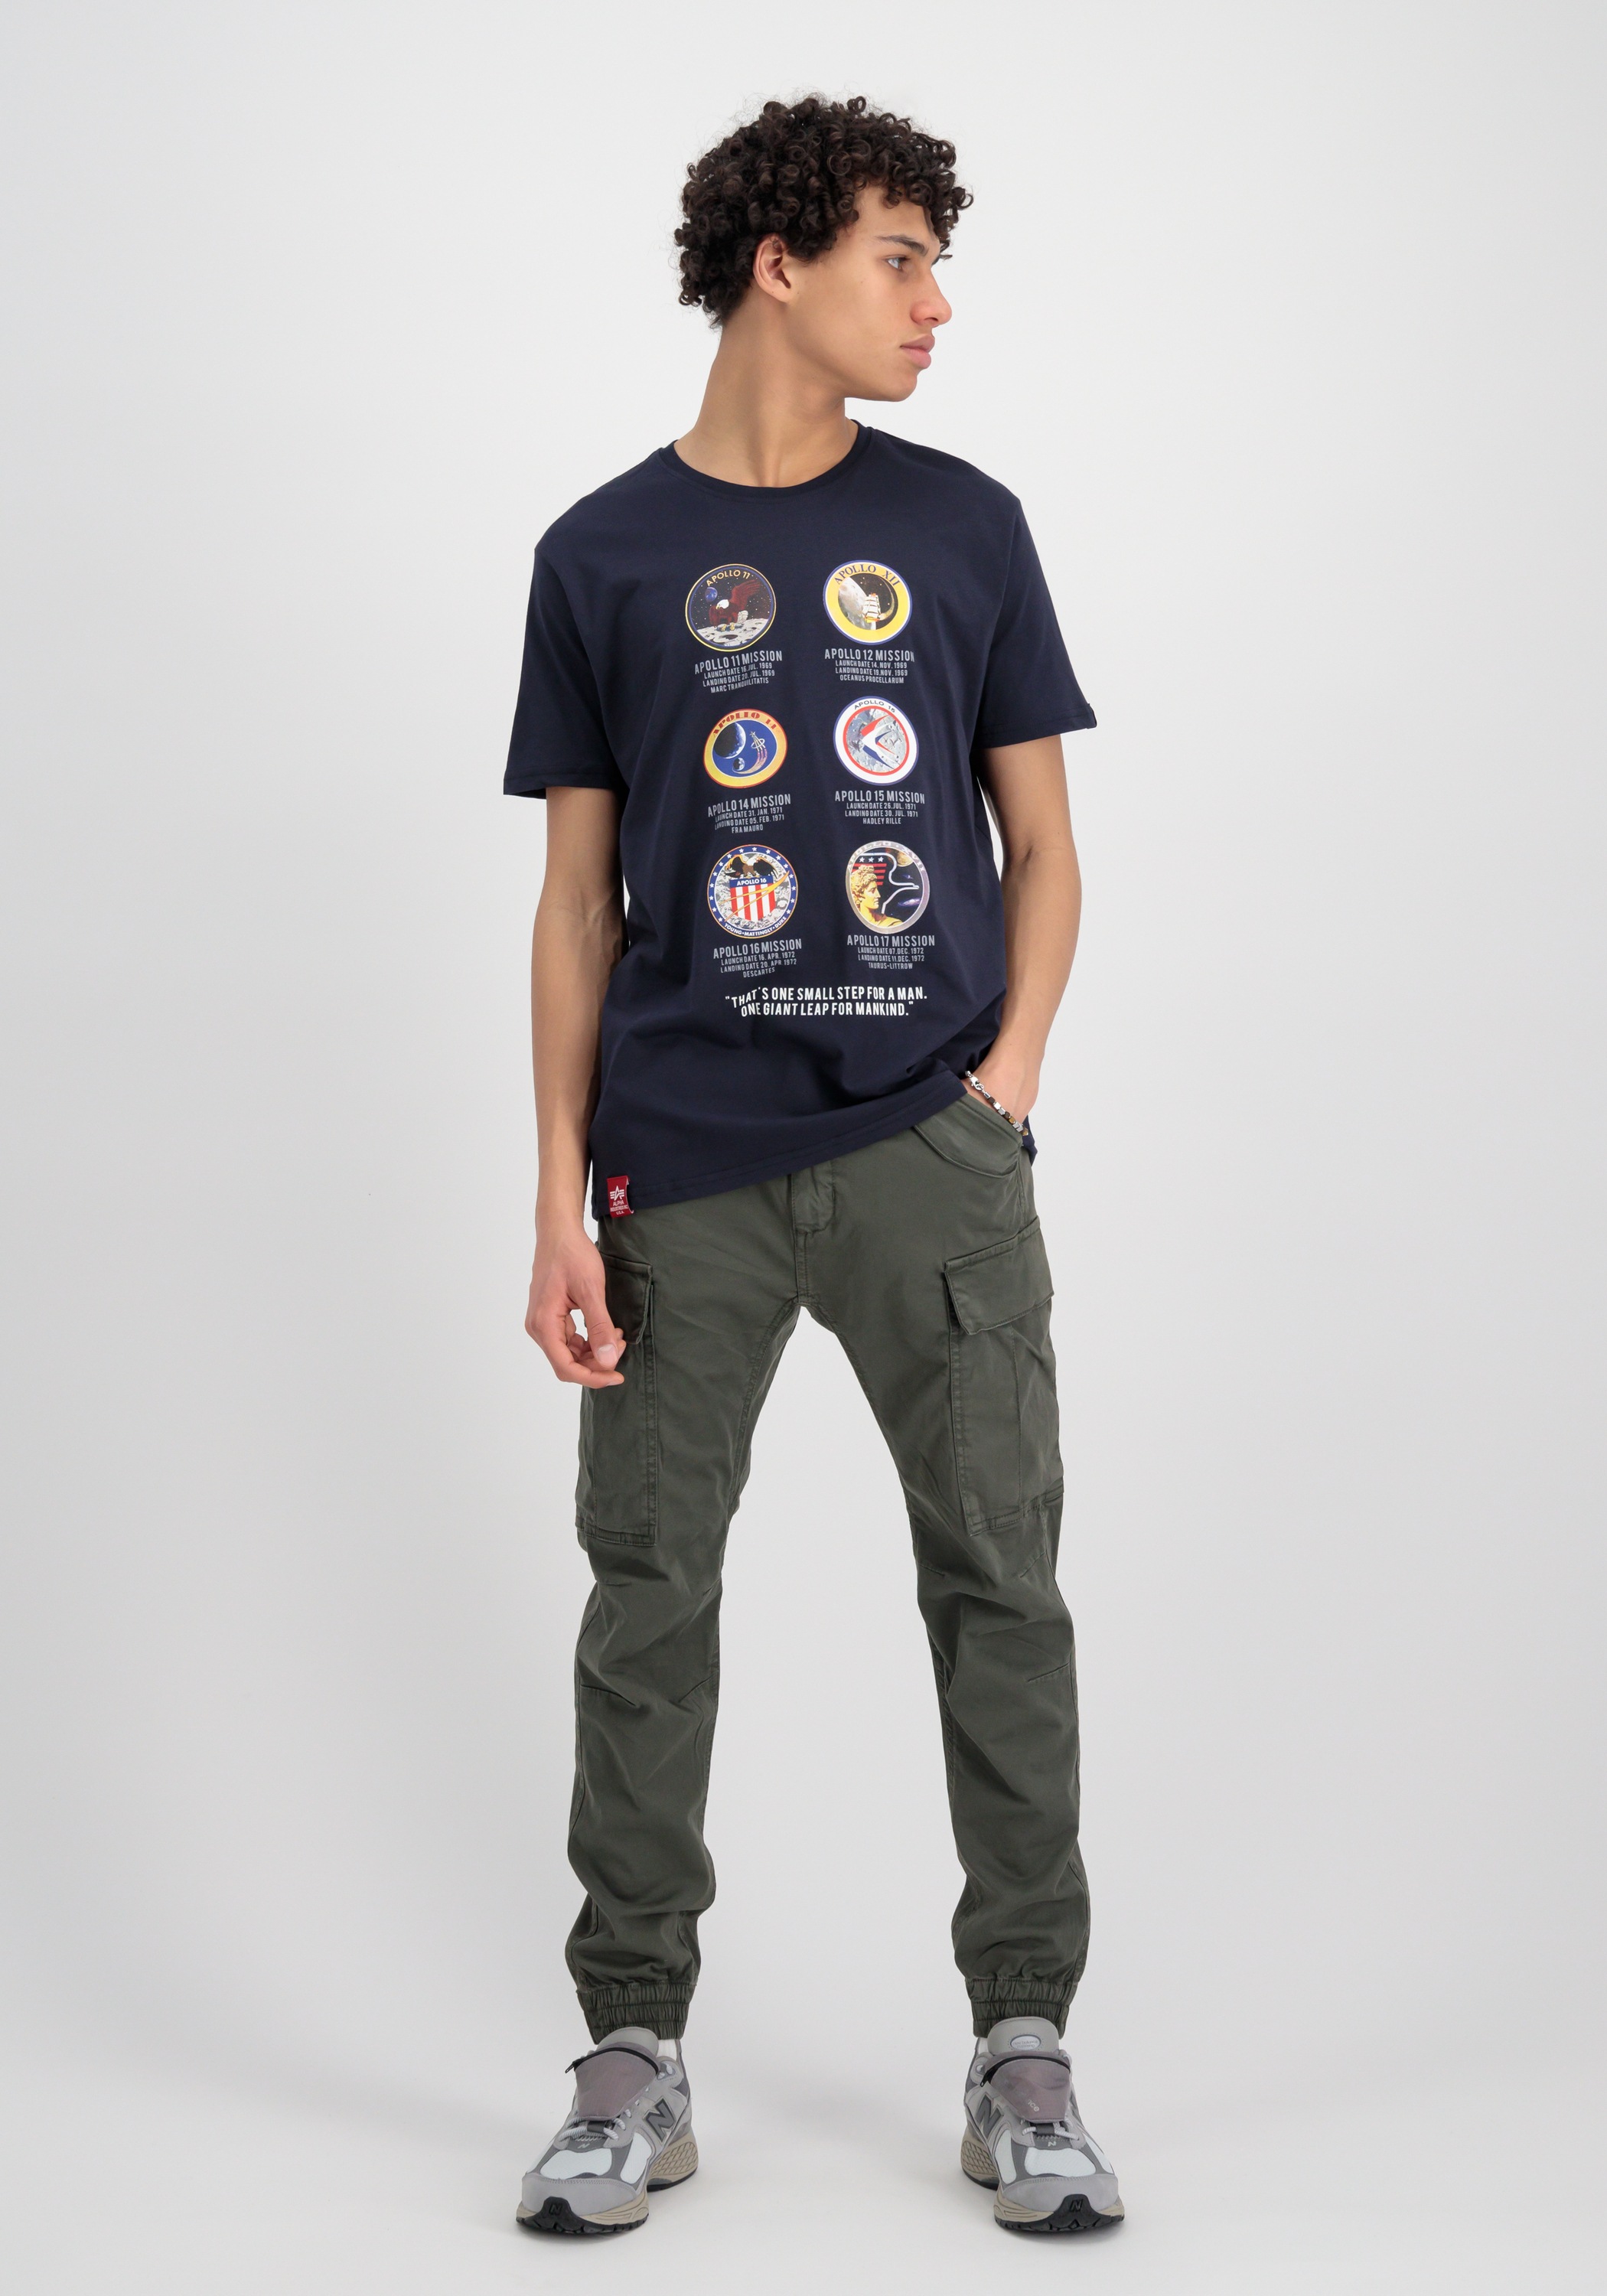 Alpha T-Shirts - T-Shirt online T- »Alpha Apollo Men Shirt« Industries Industries Mission kaufen